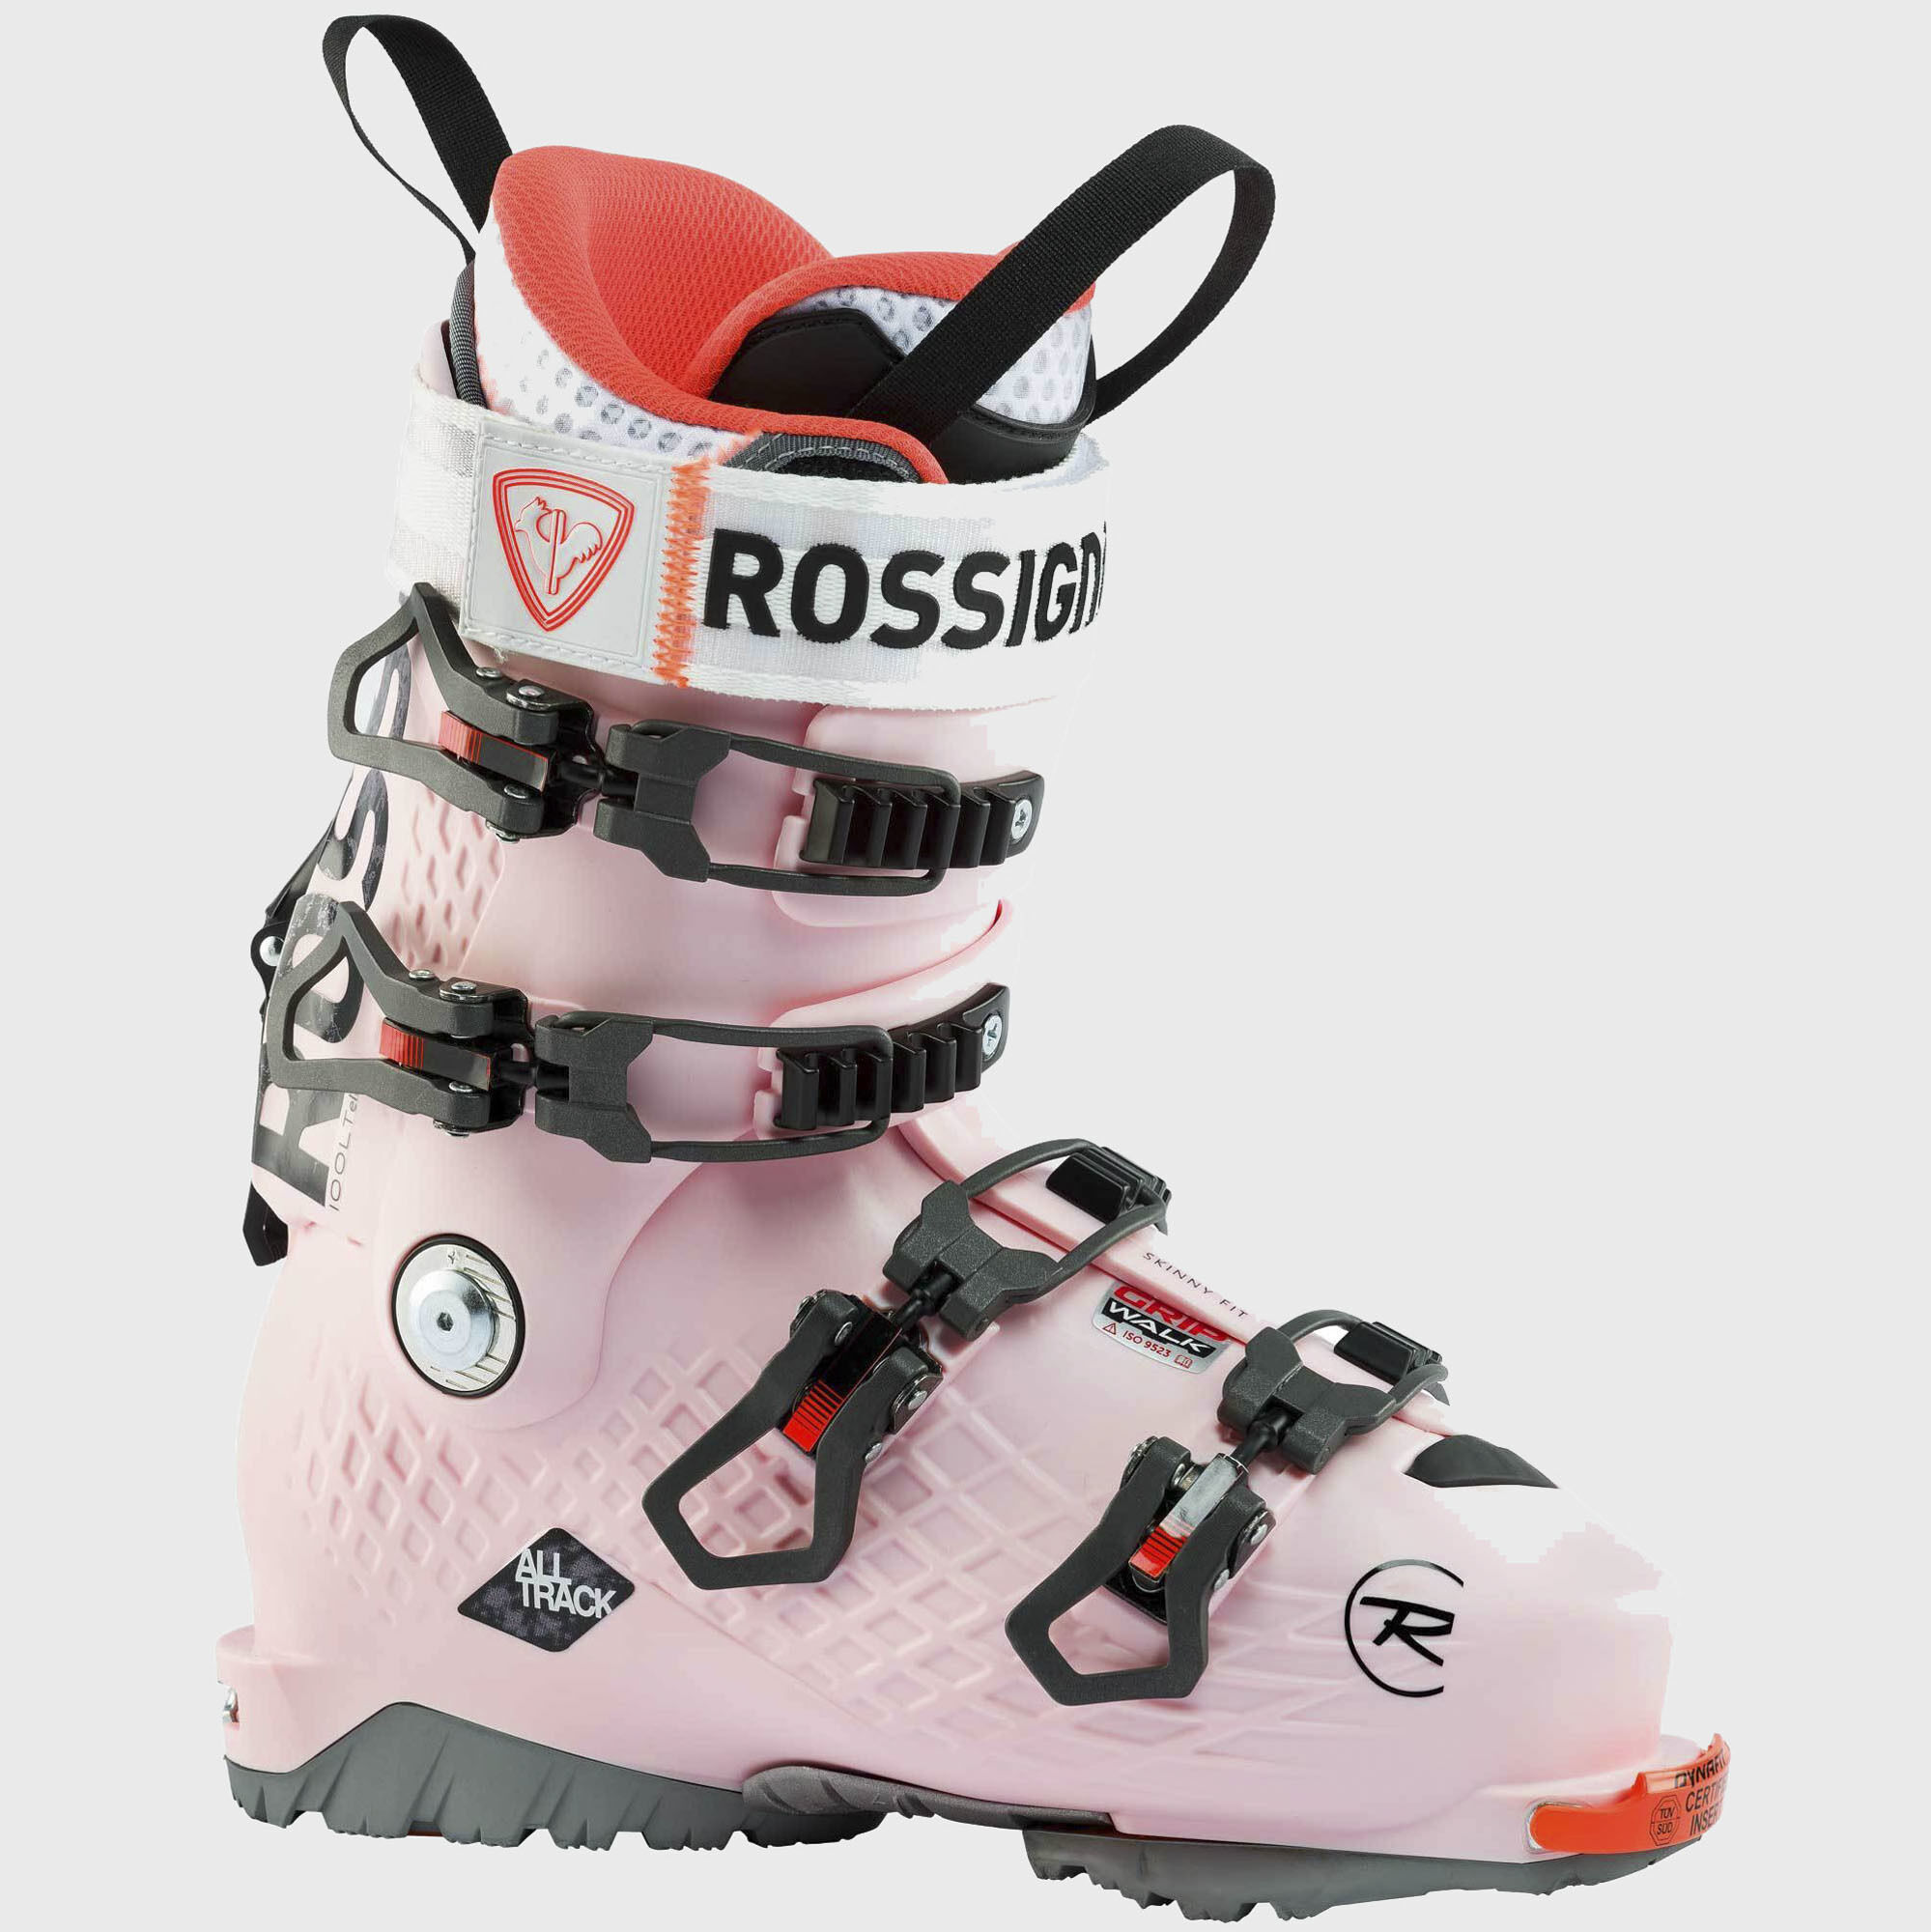 Rossignol Women's Free Touring Ski Boots Alltrack Elite 110 LT W 